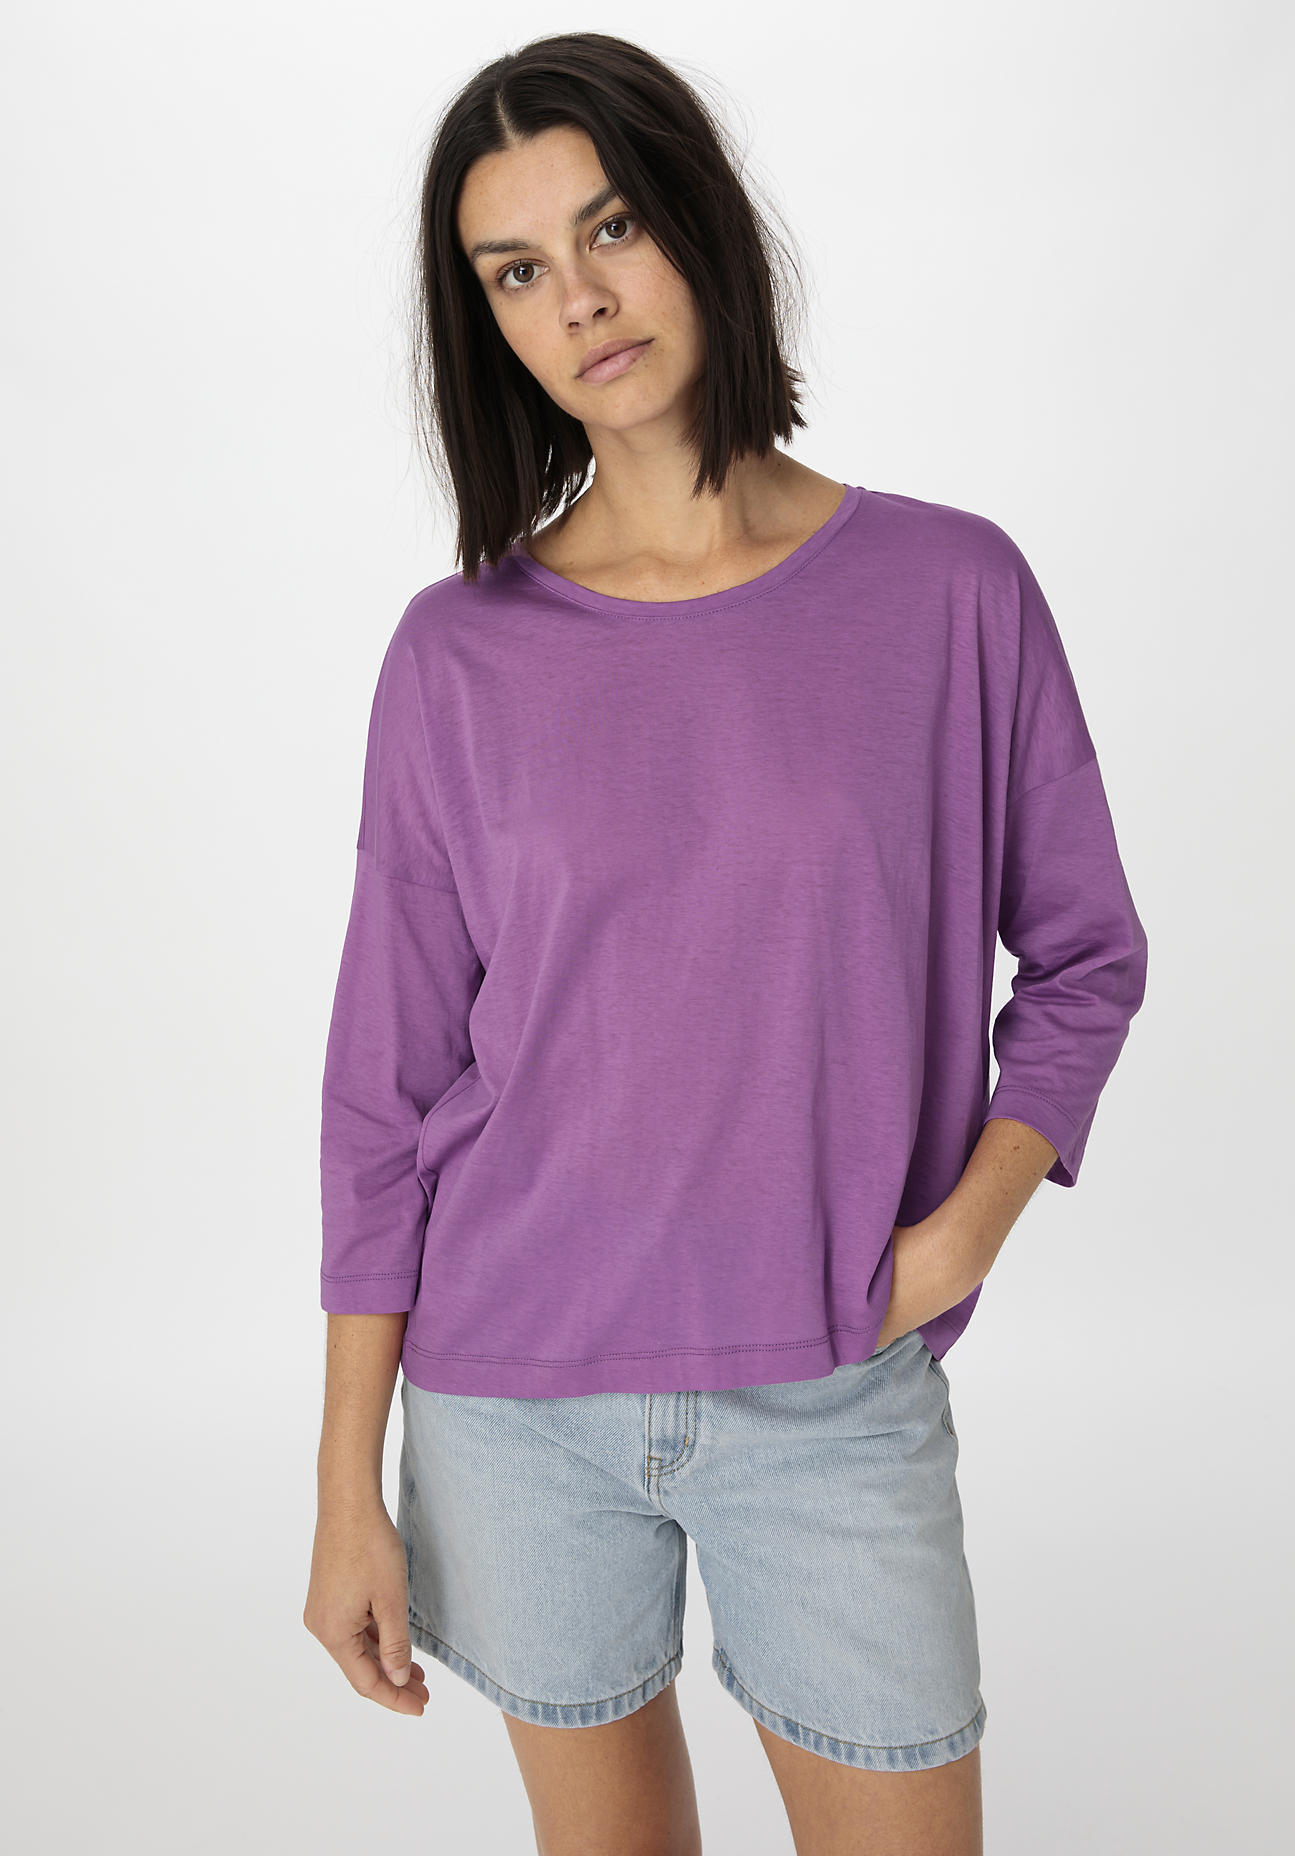 hessnatur Damen Premium Light Shirt Oversized aus Bio-Baumwolle - lila - Größe L